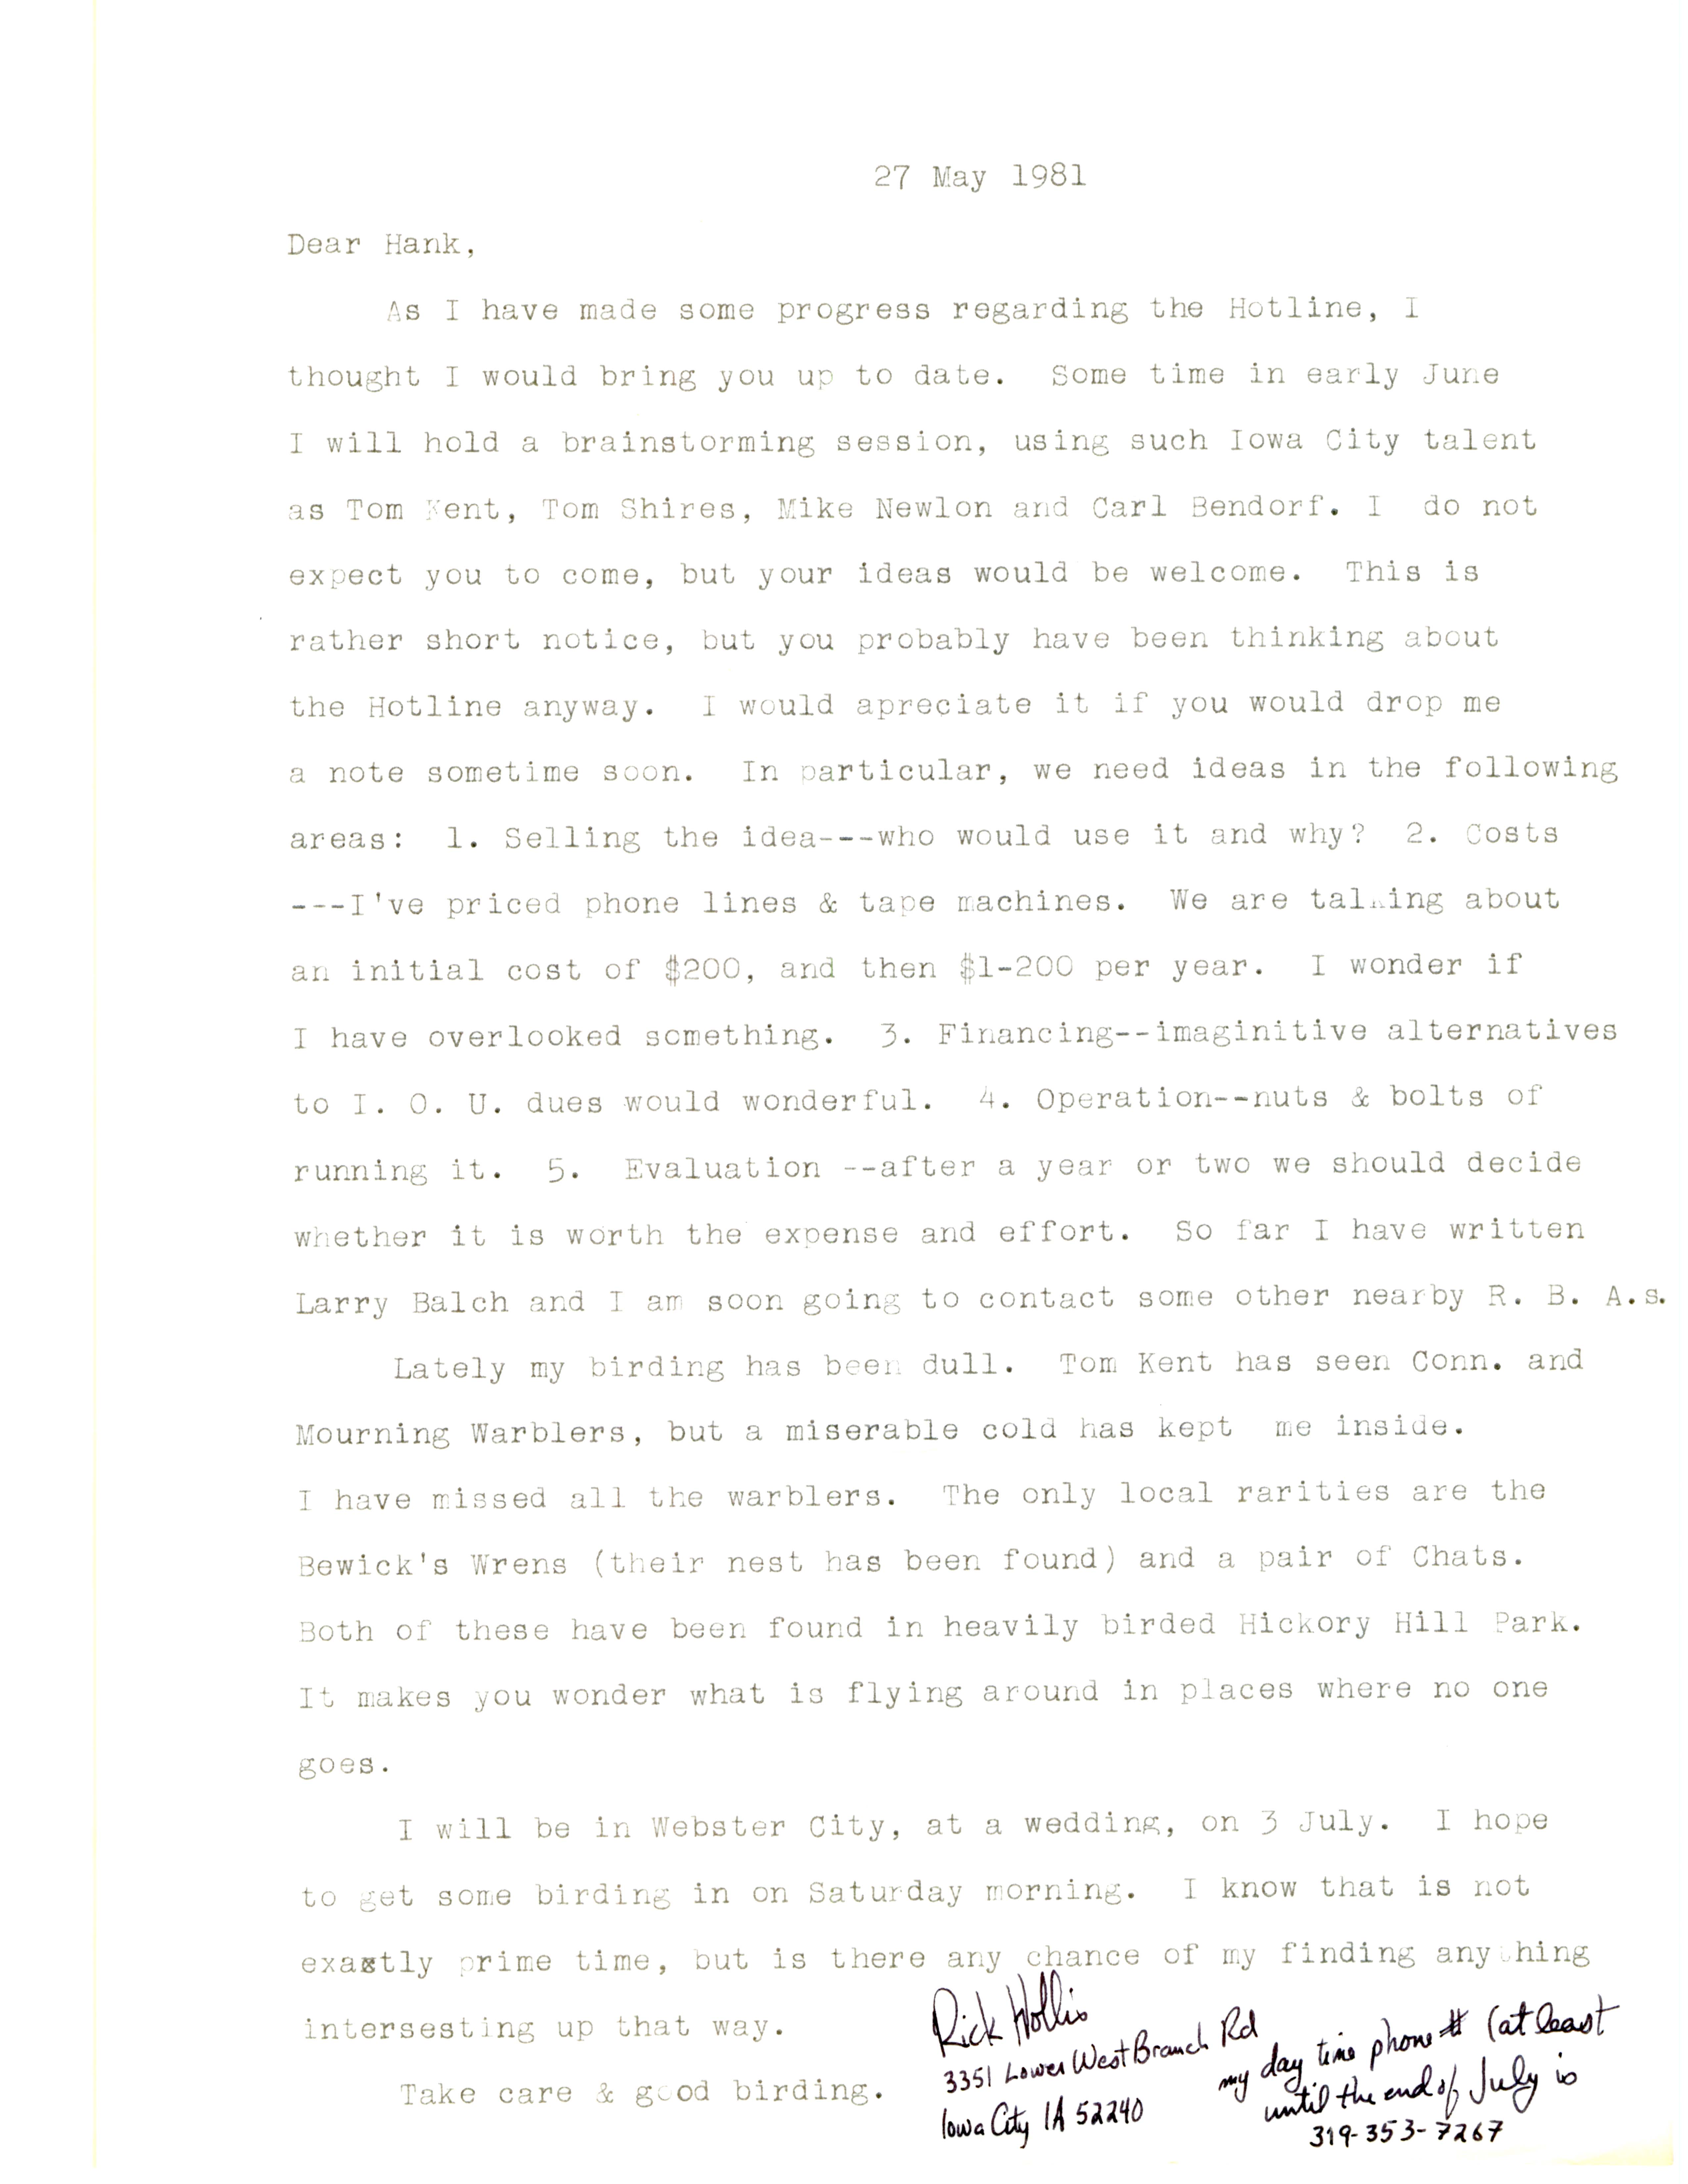 Richard Jule Hollis letter to Hank Zaletel regarding setting up a Bird Hotline, May 27, 1981